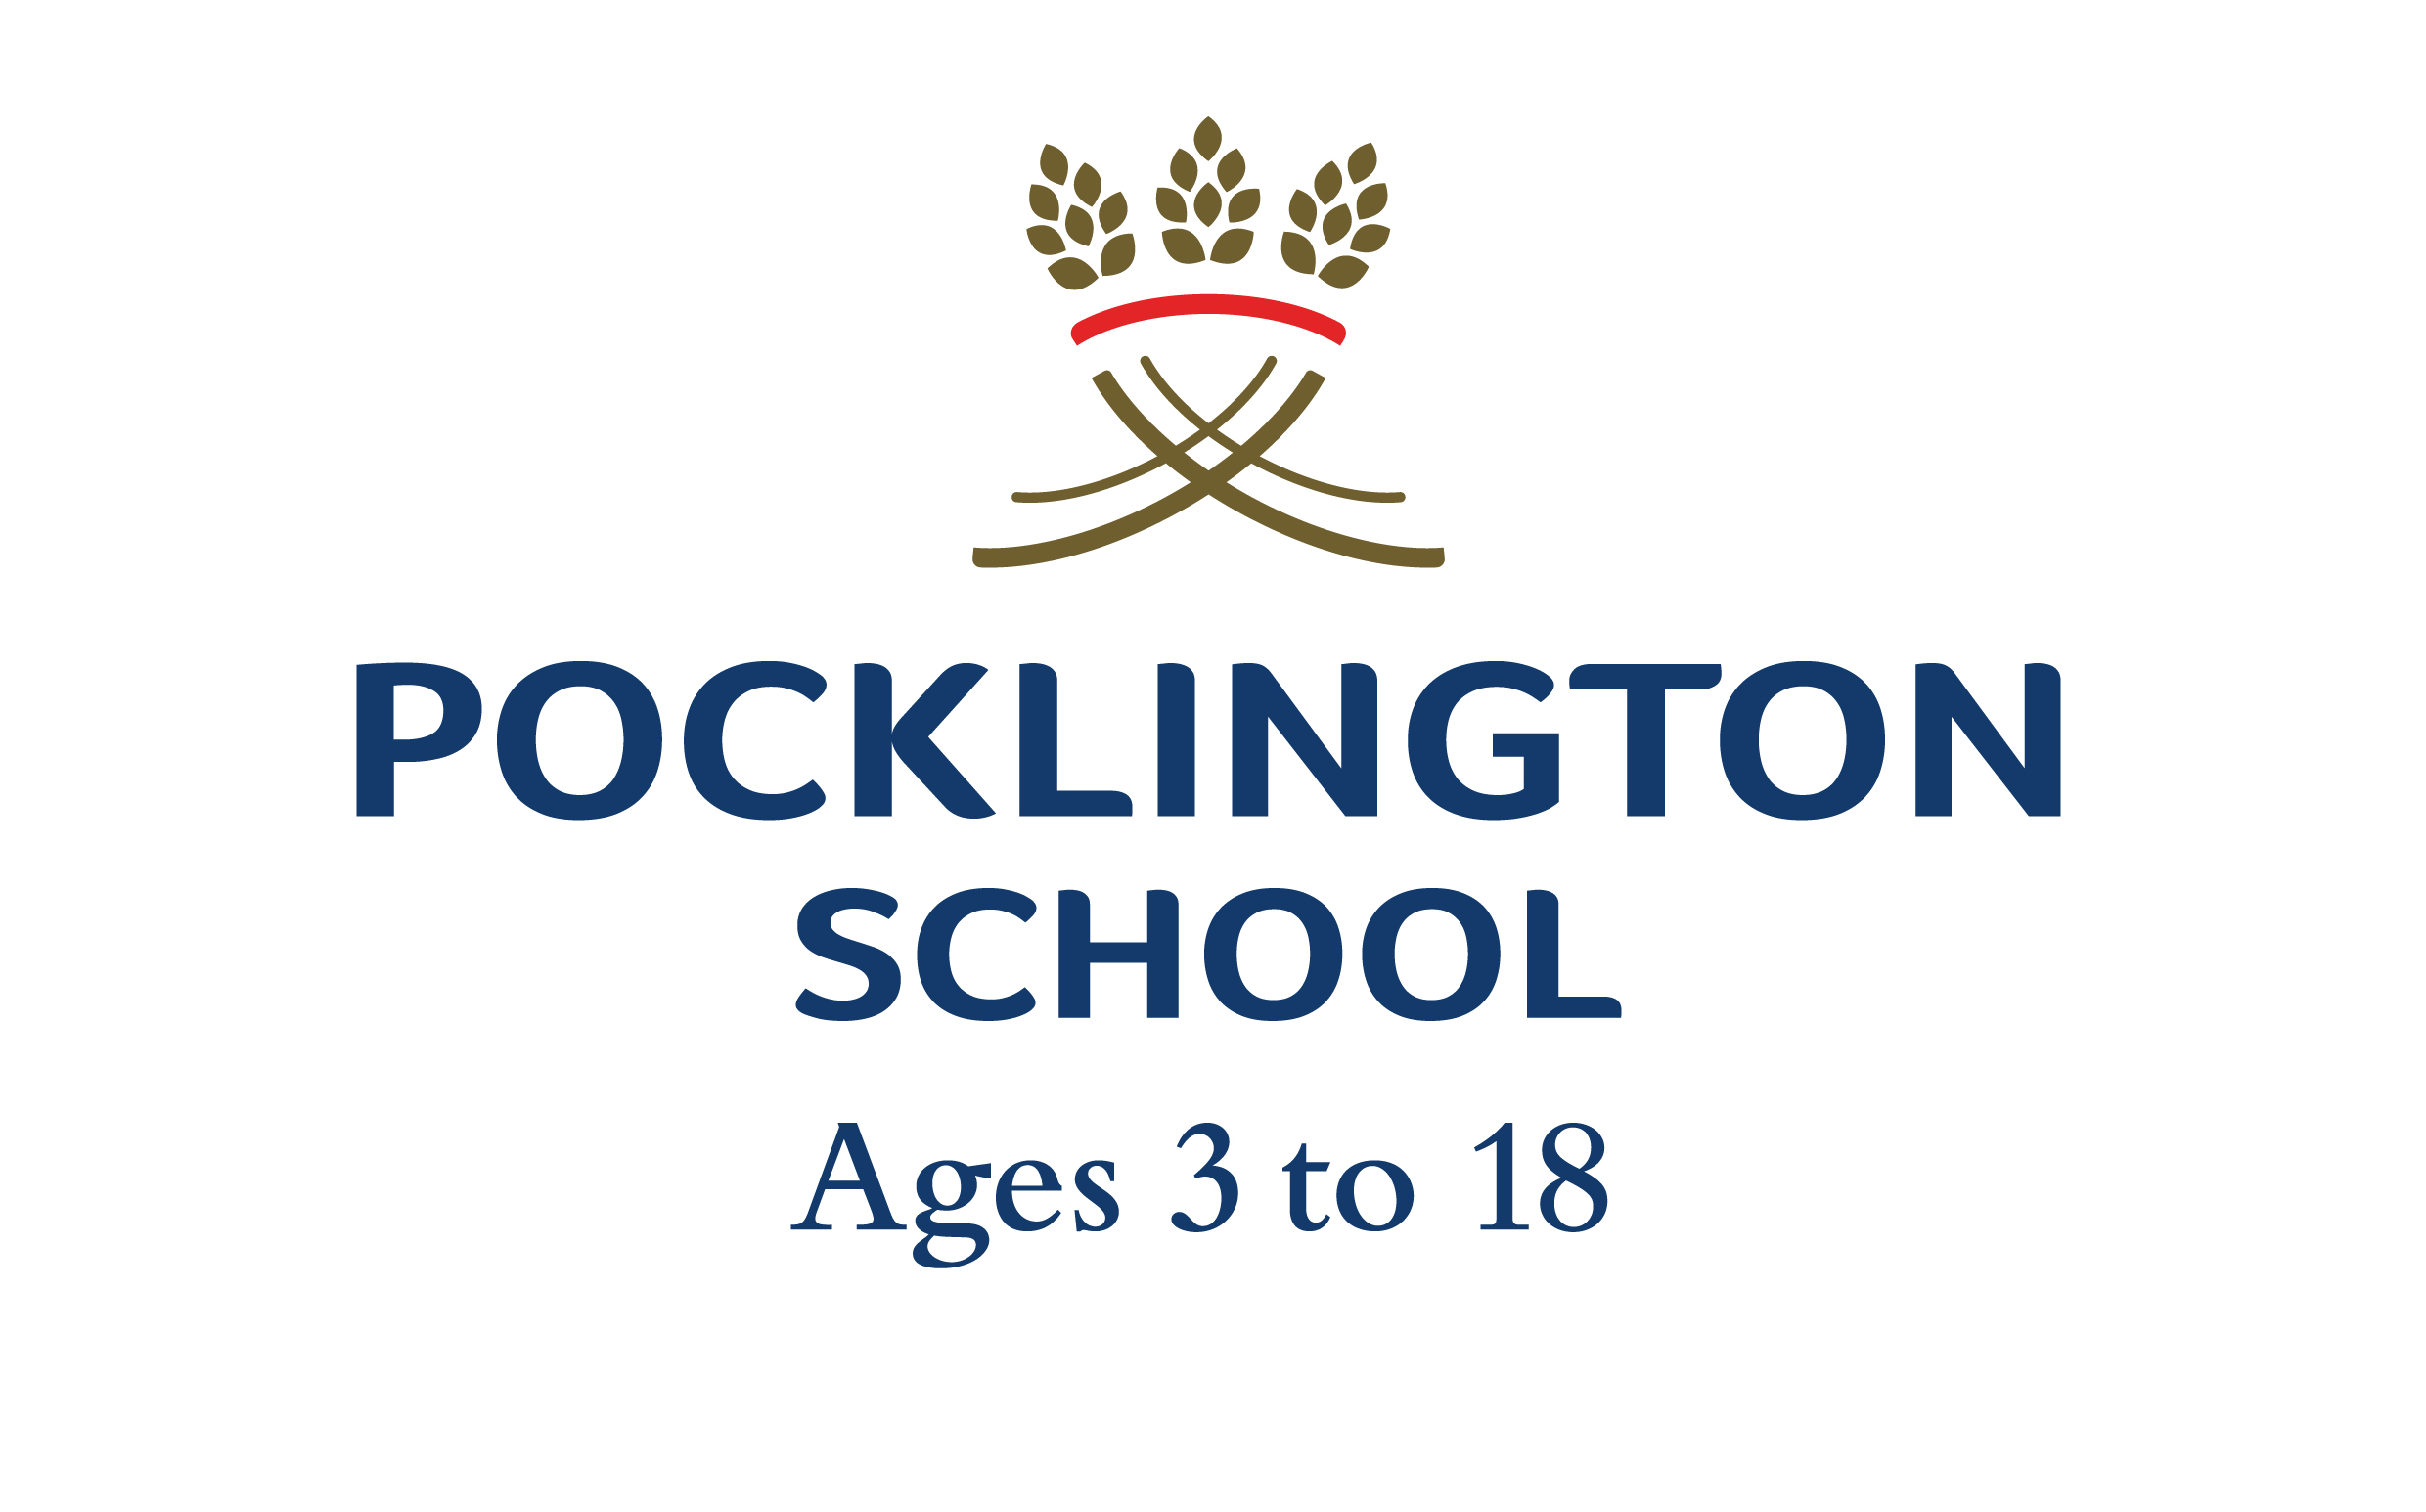 Pocklington School